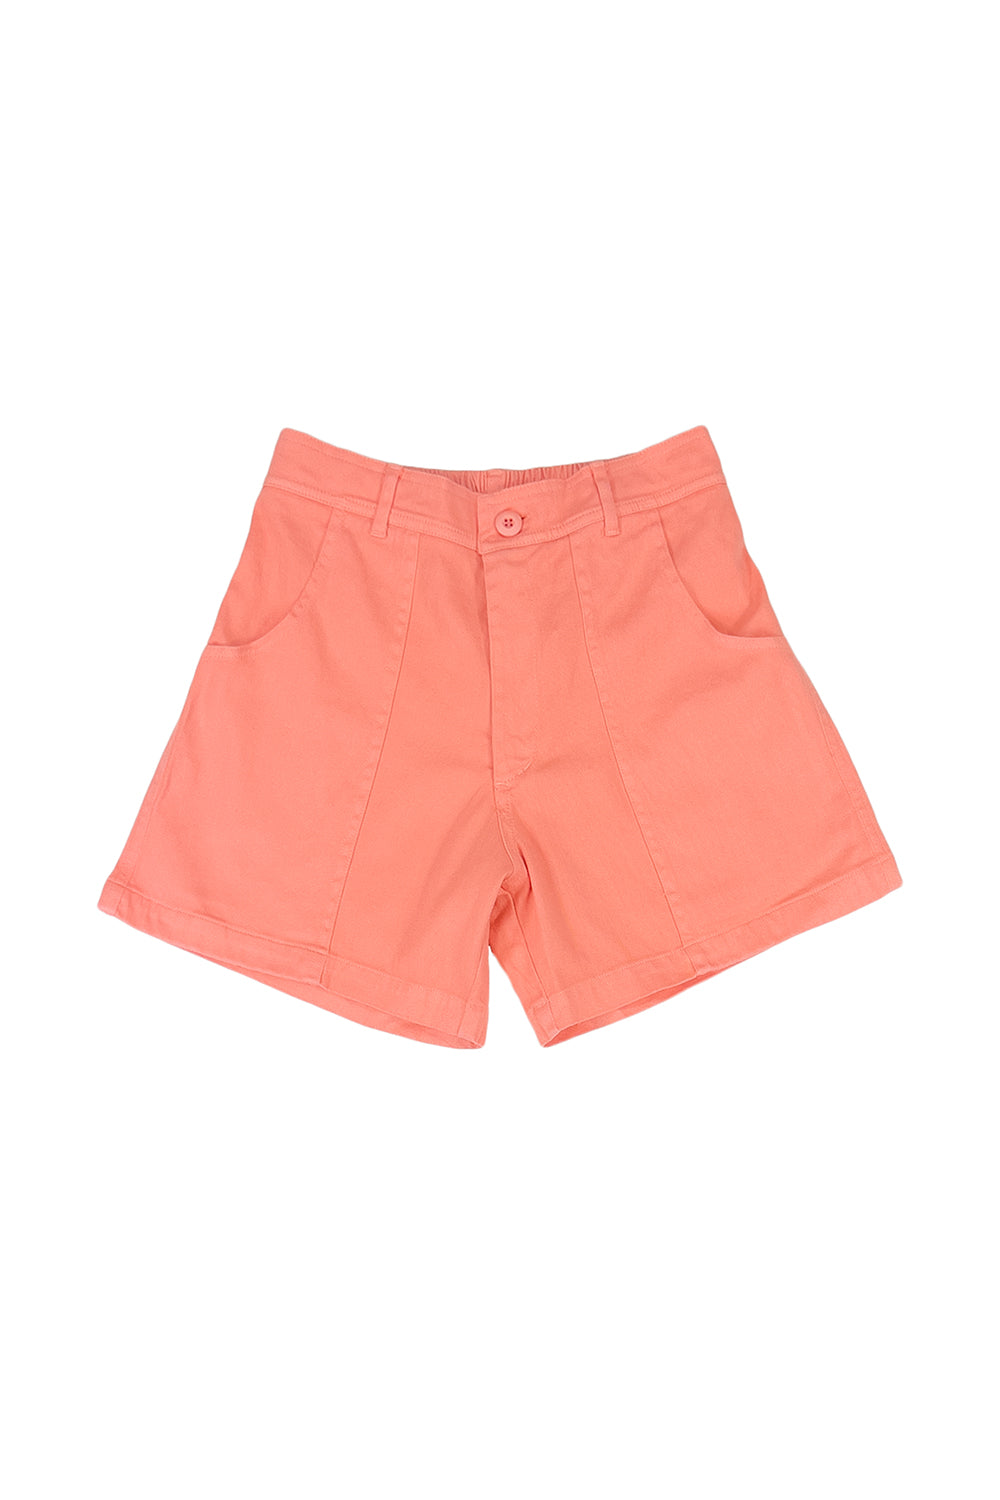 Venice Short | Jungmaven Hemp Clothing & Accessories / Color: Pink Salmon